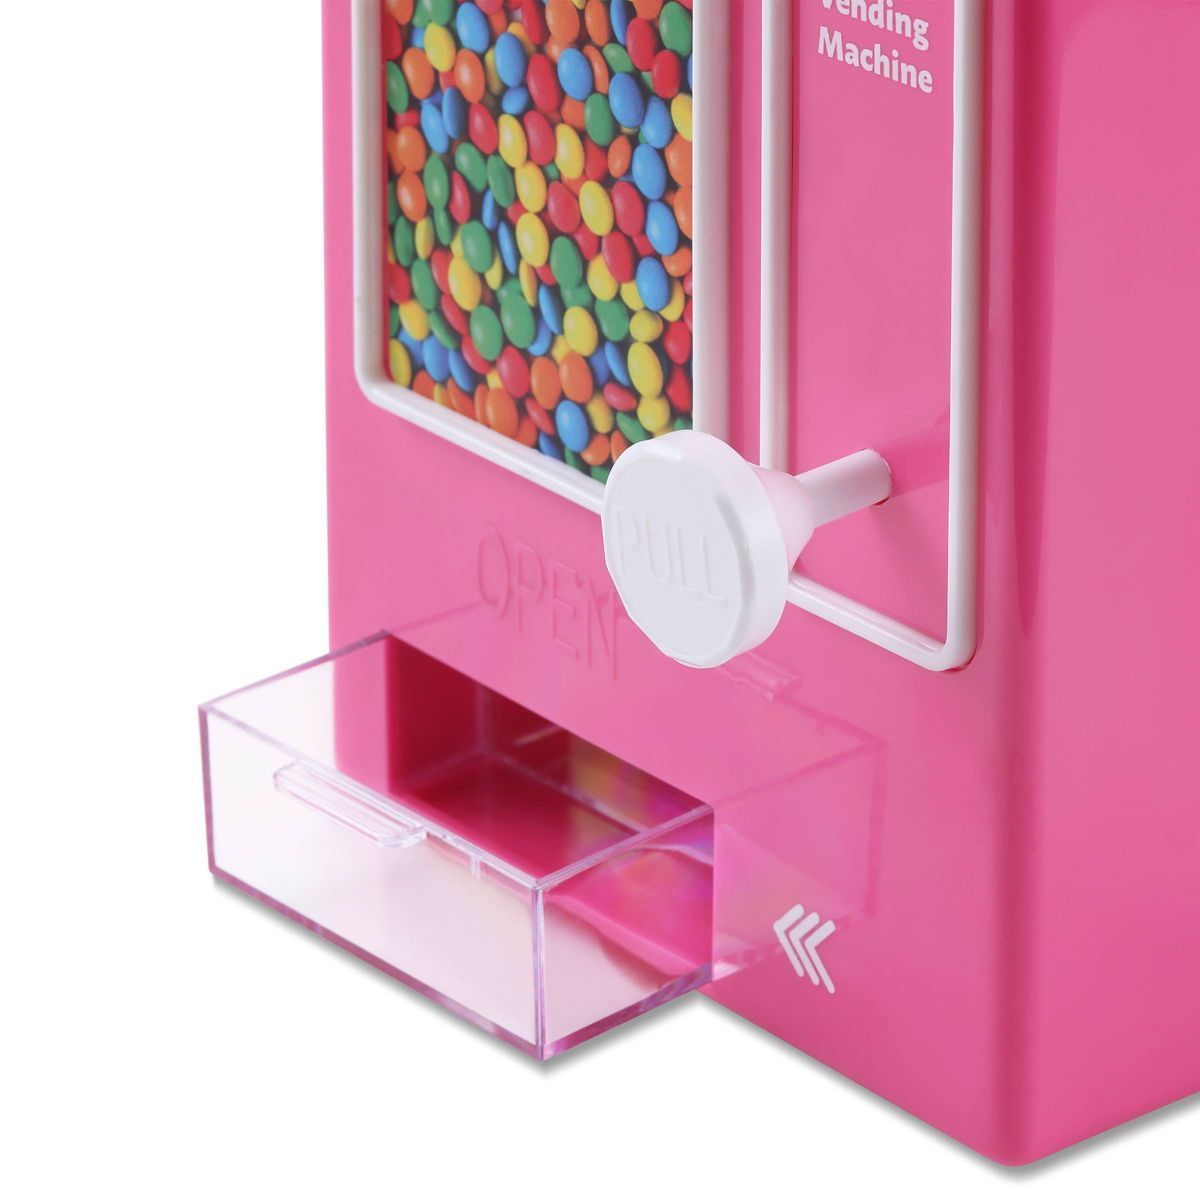 1000 ml Vending Machine Dry Food Dispenser Pink - Bullseye's Playground™ | Target